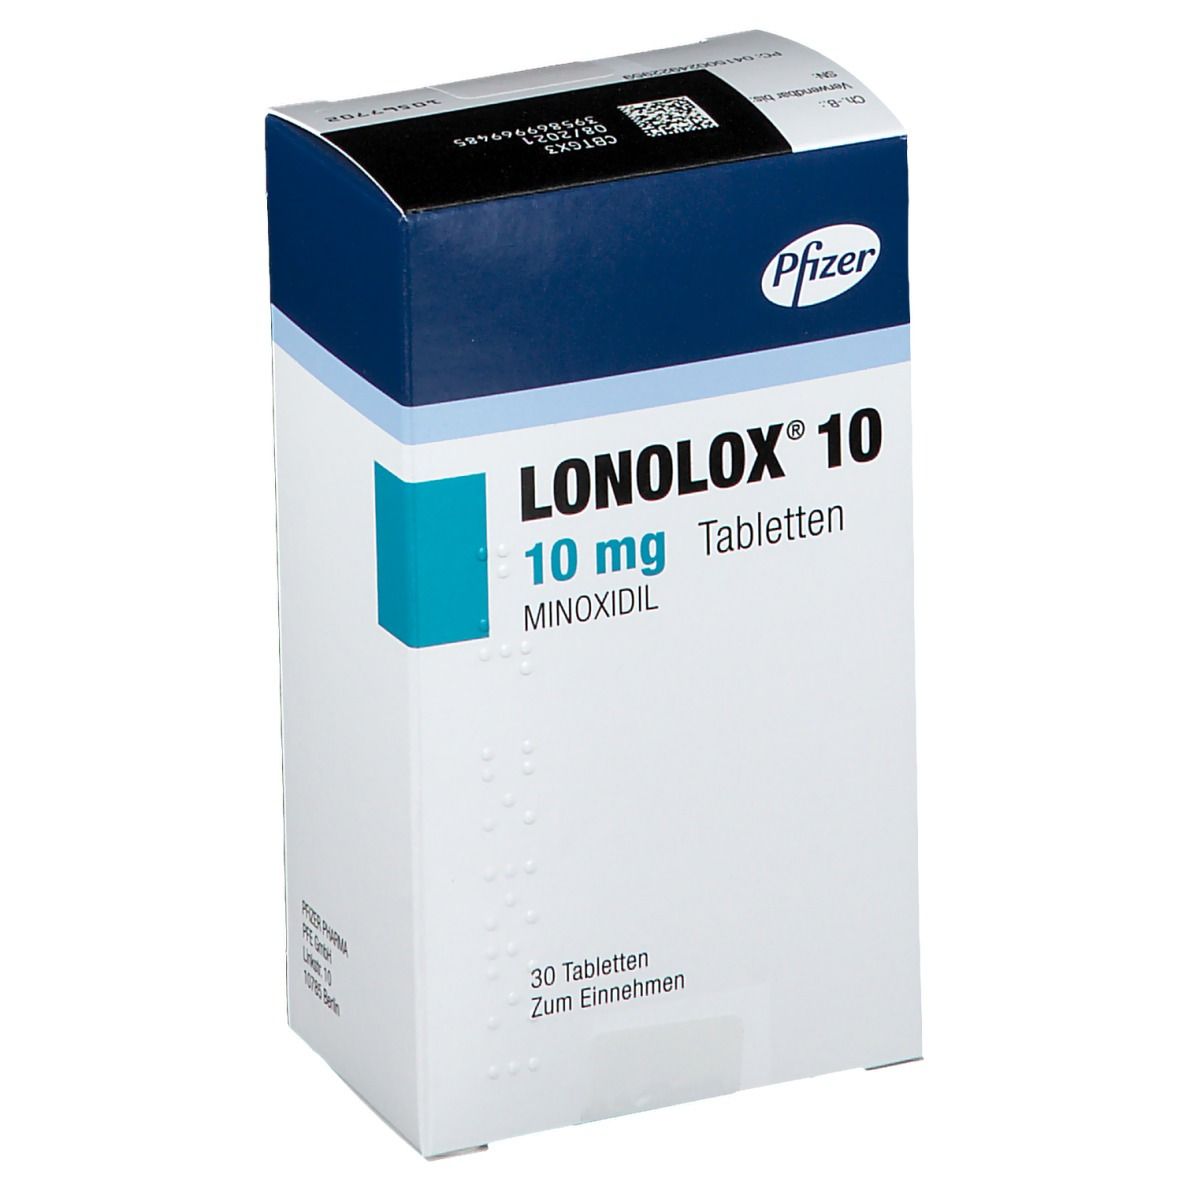 LONOLOX® 10 mg